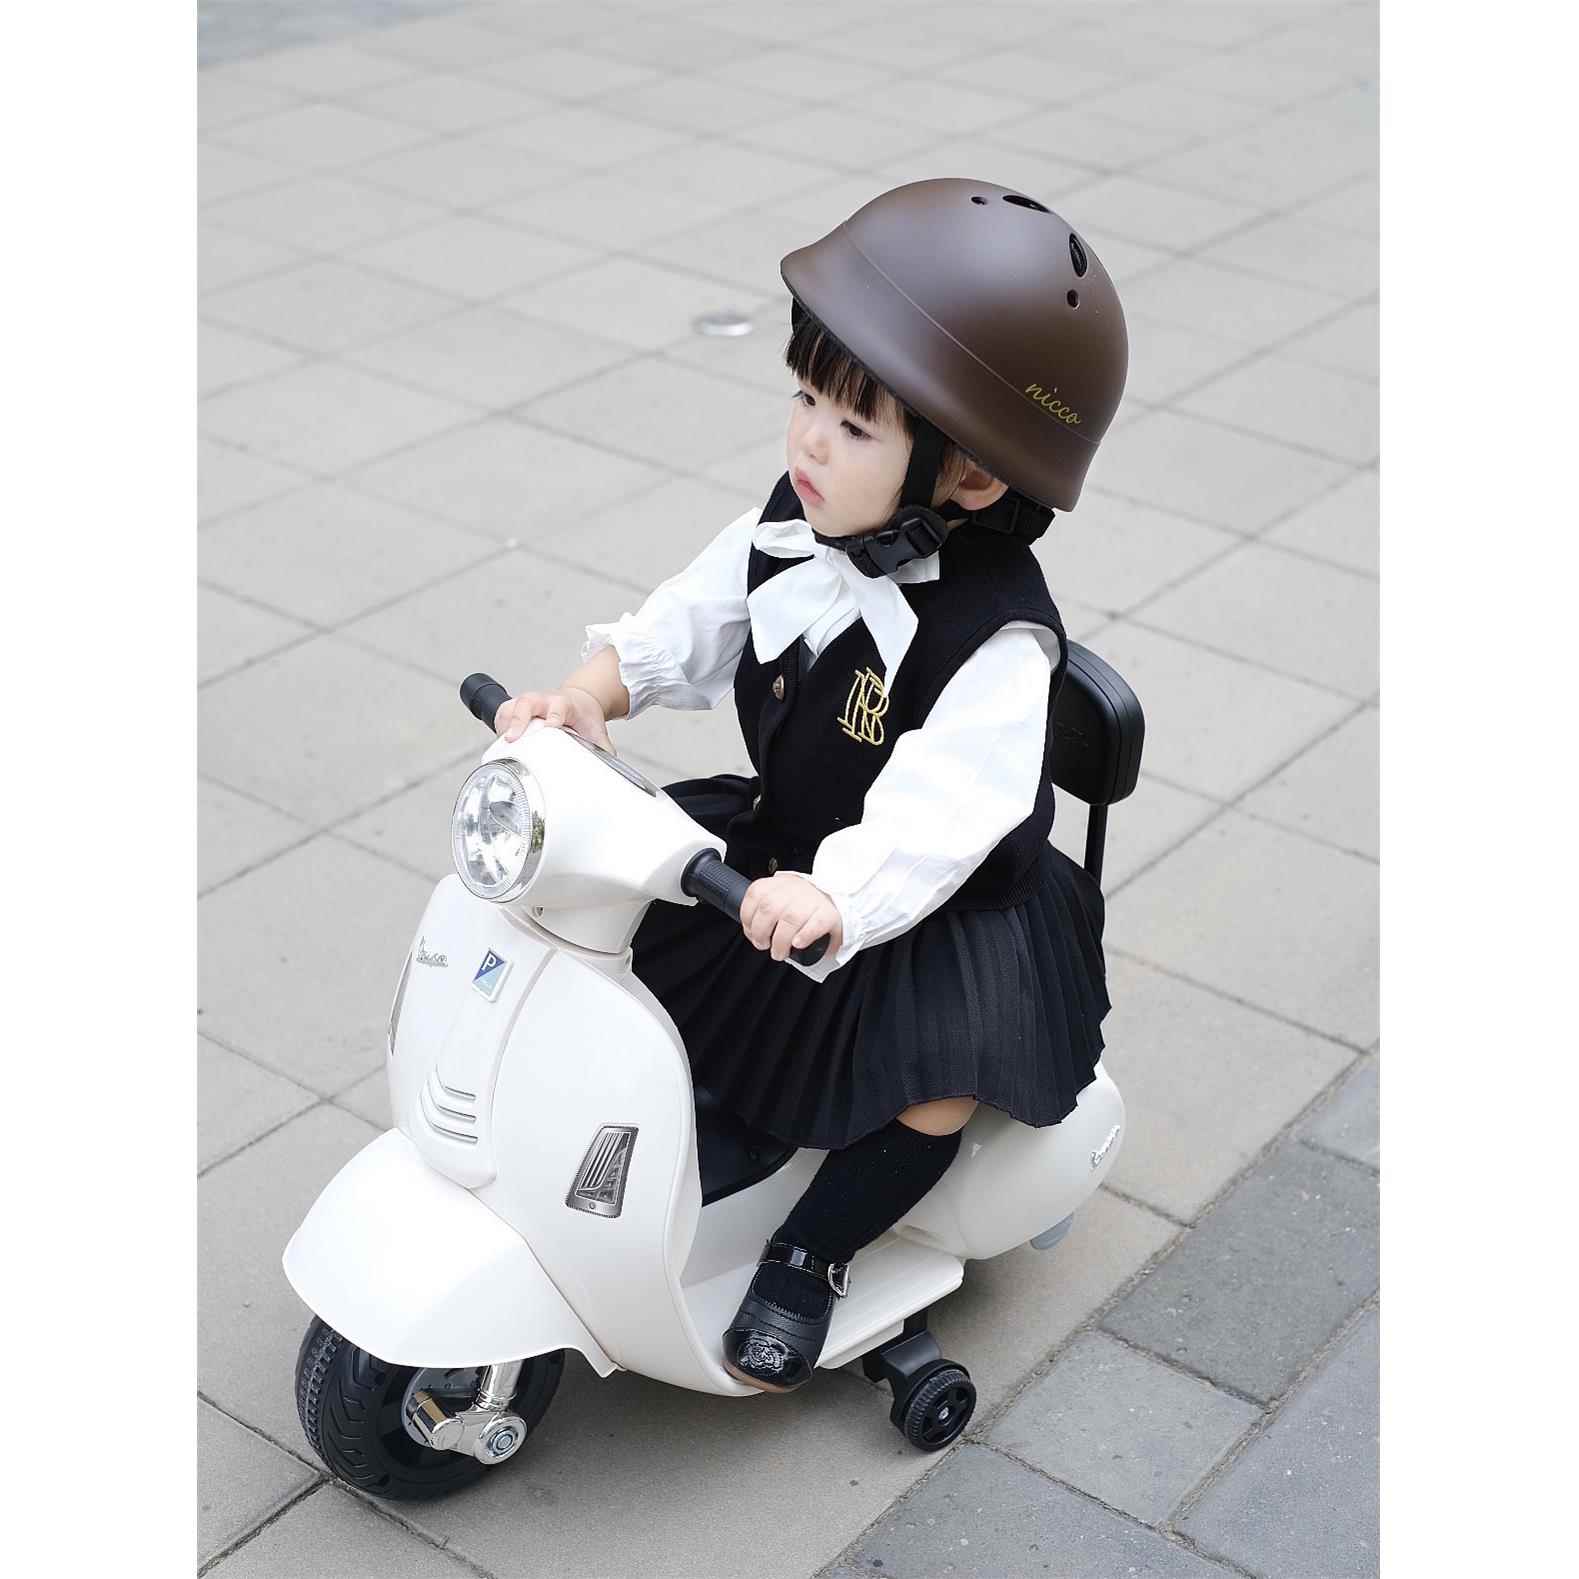 vespa mini儿童电动摩托车宝宝车迷你电瓶车小摩托小孩玩具维斯帕